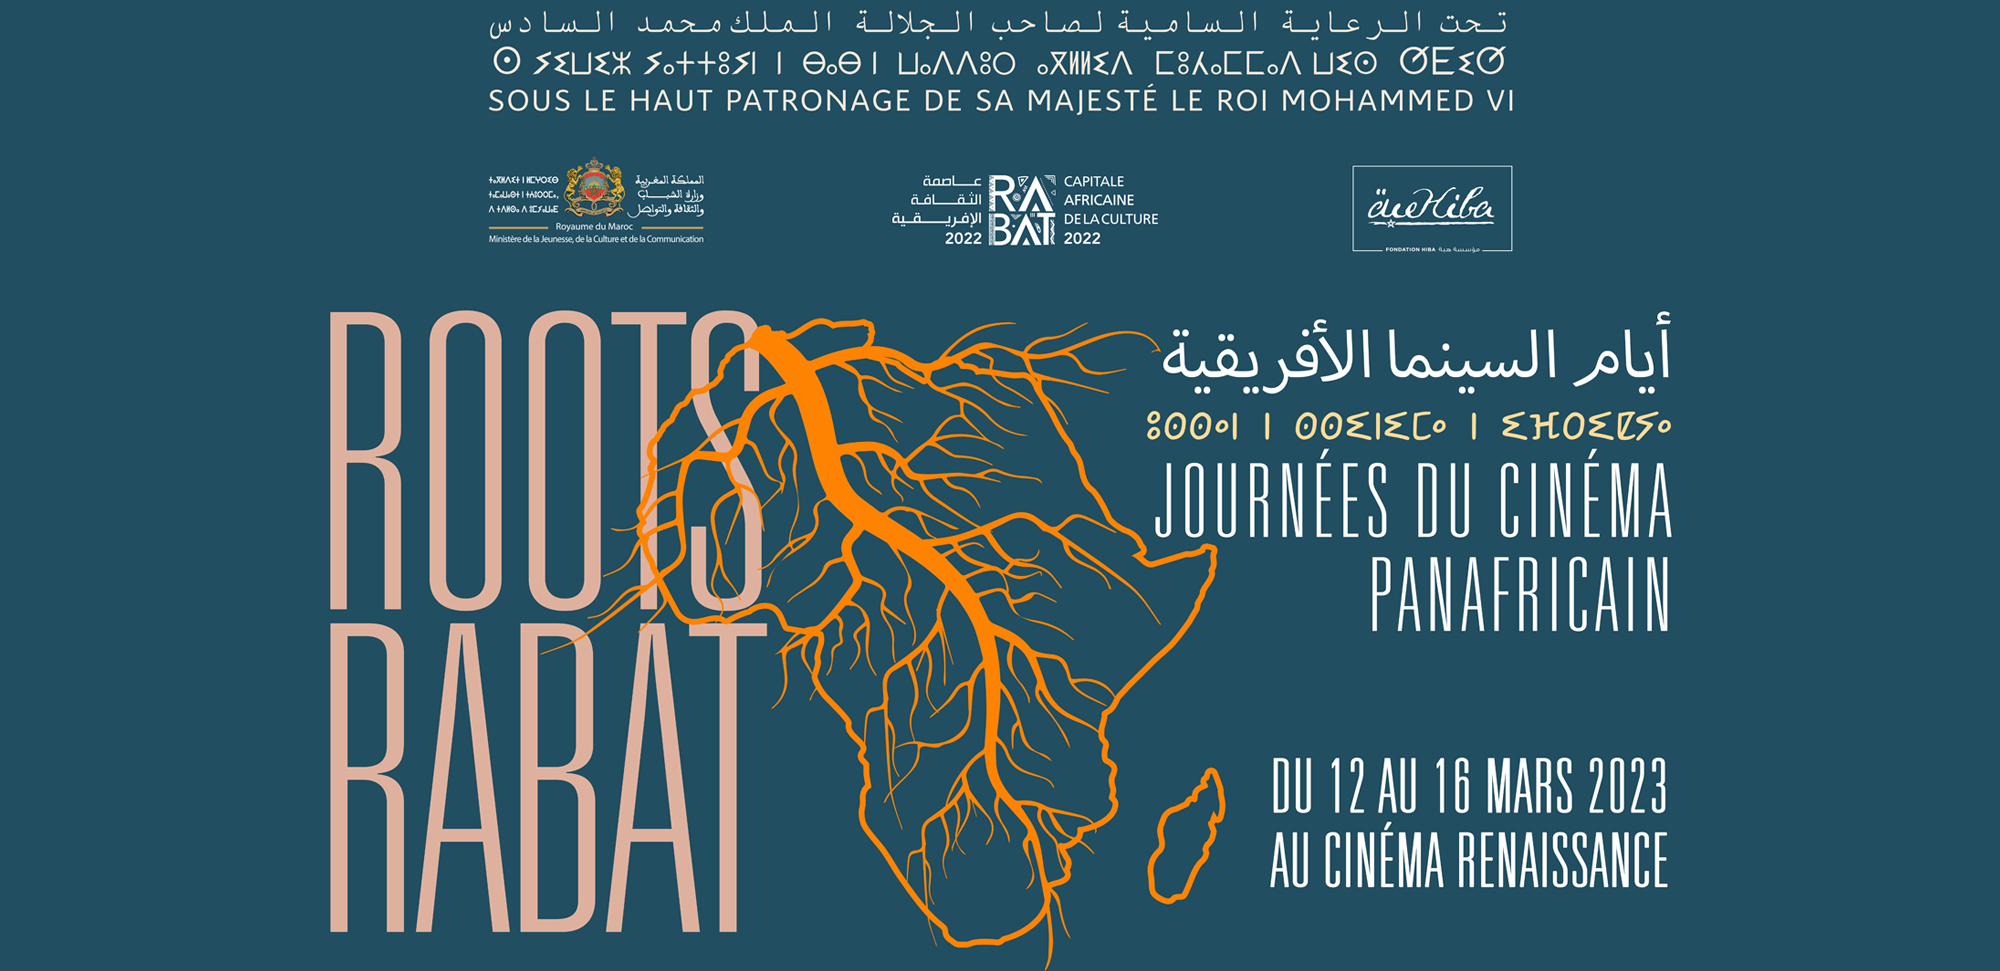 ROOTS Rabat, el festival de cine panafricano